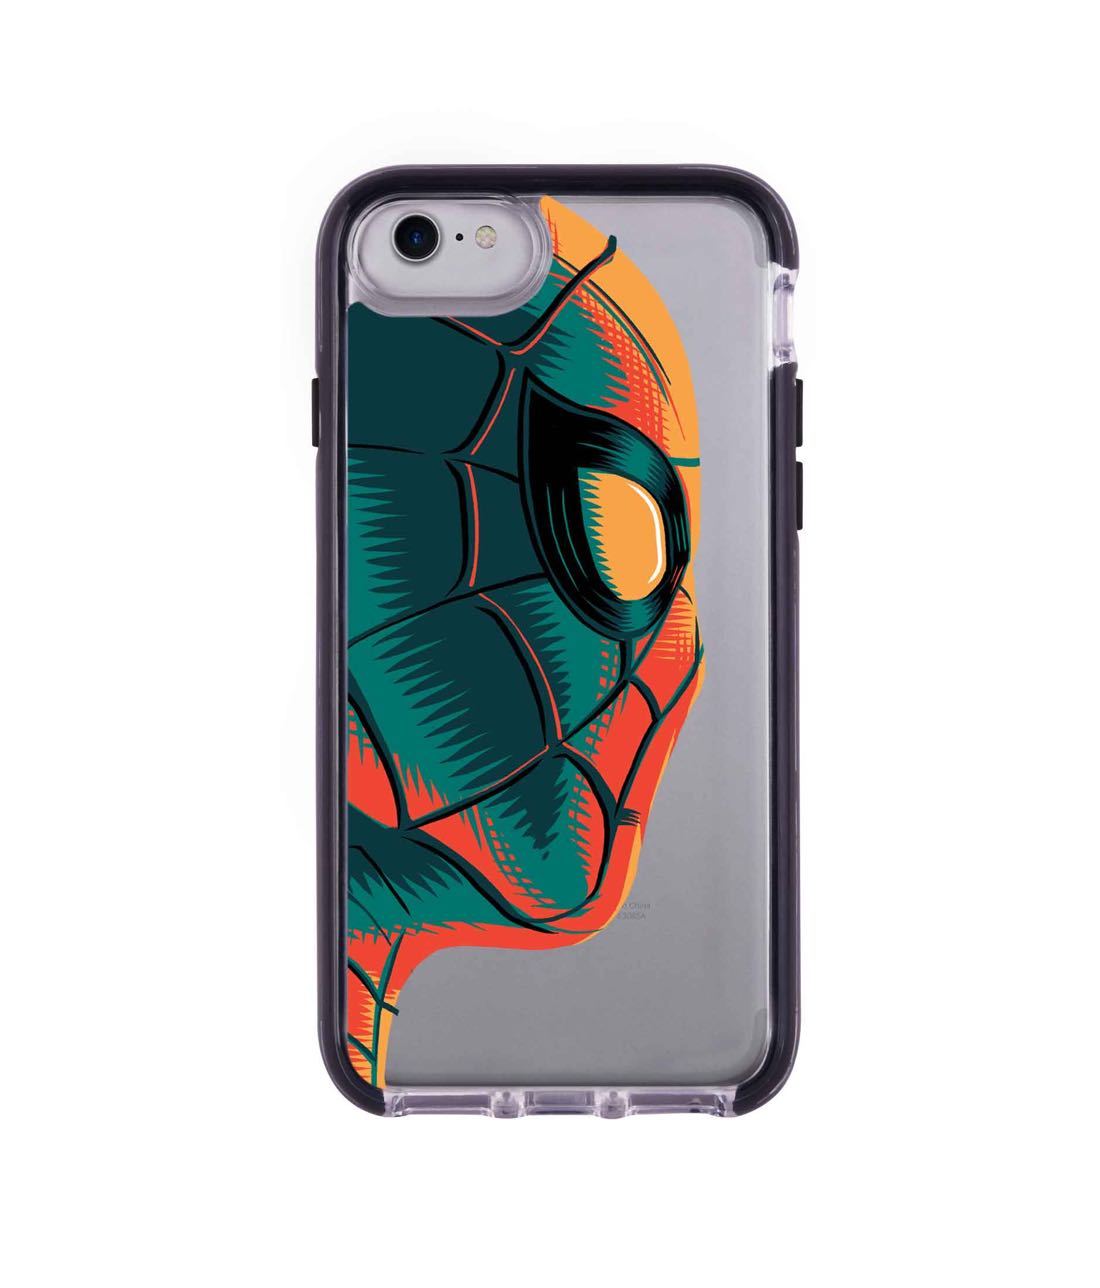 Illuminated Spiderman - Extreme Phone Case for iPhone 7